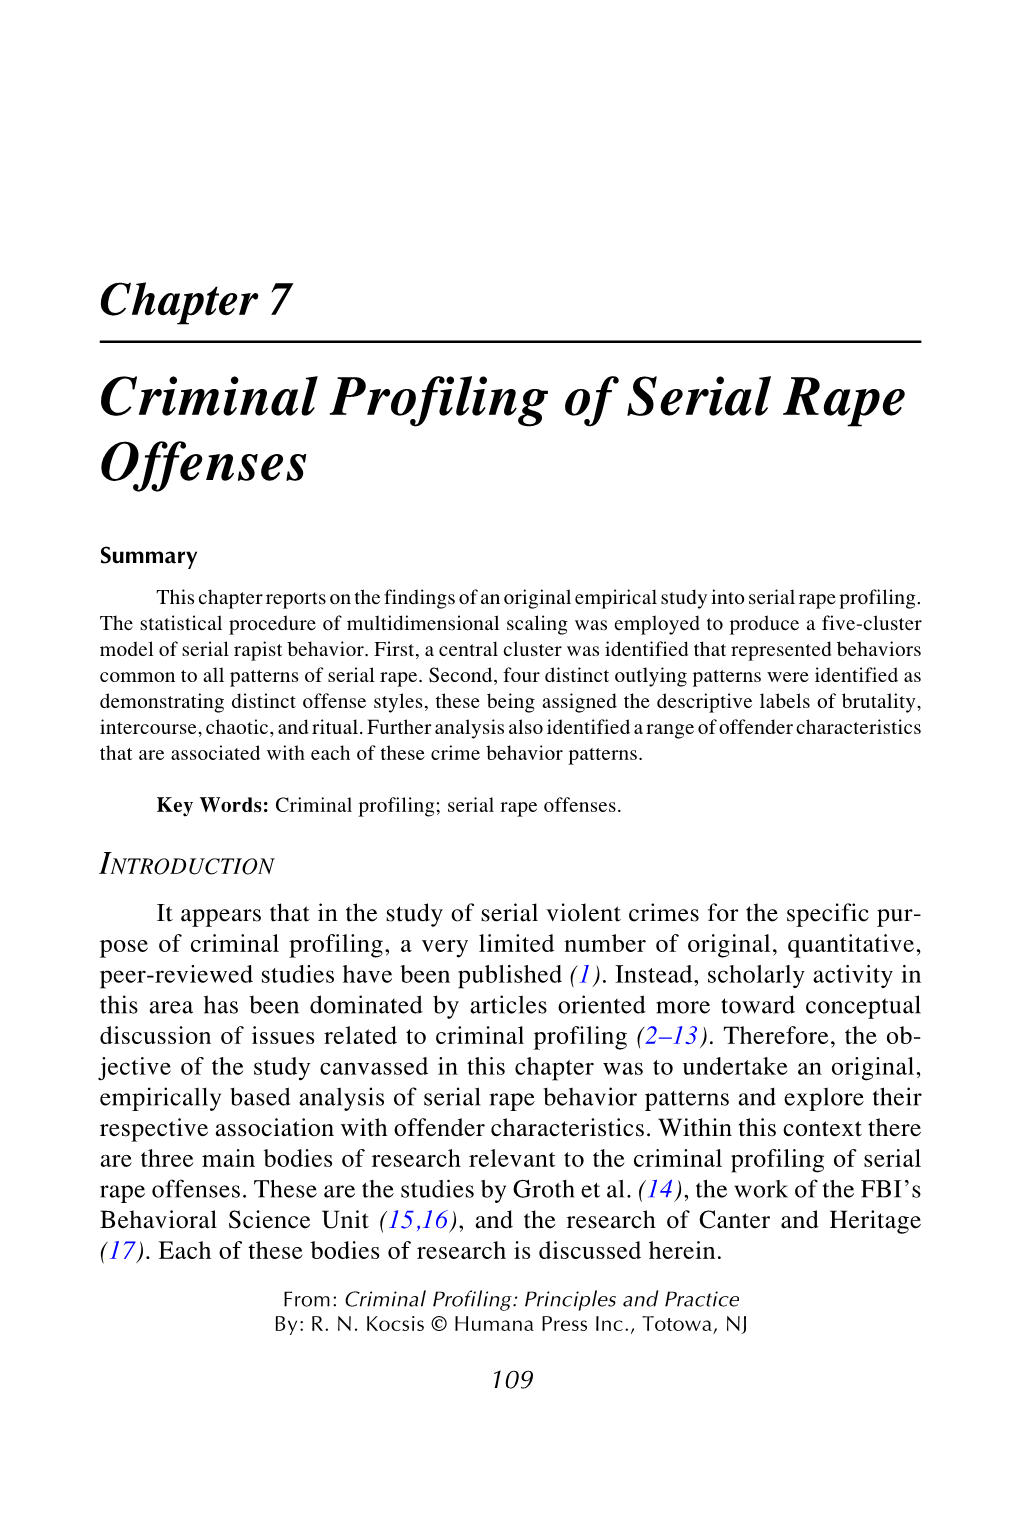 Chapter 7/Profiling Serial Rape 109